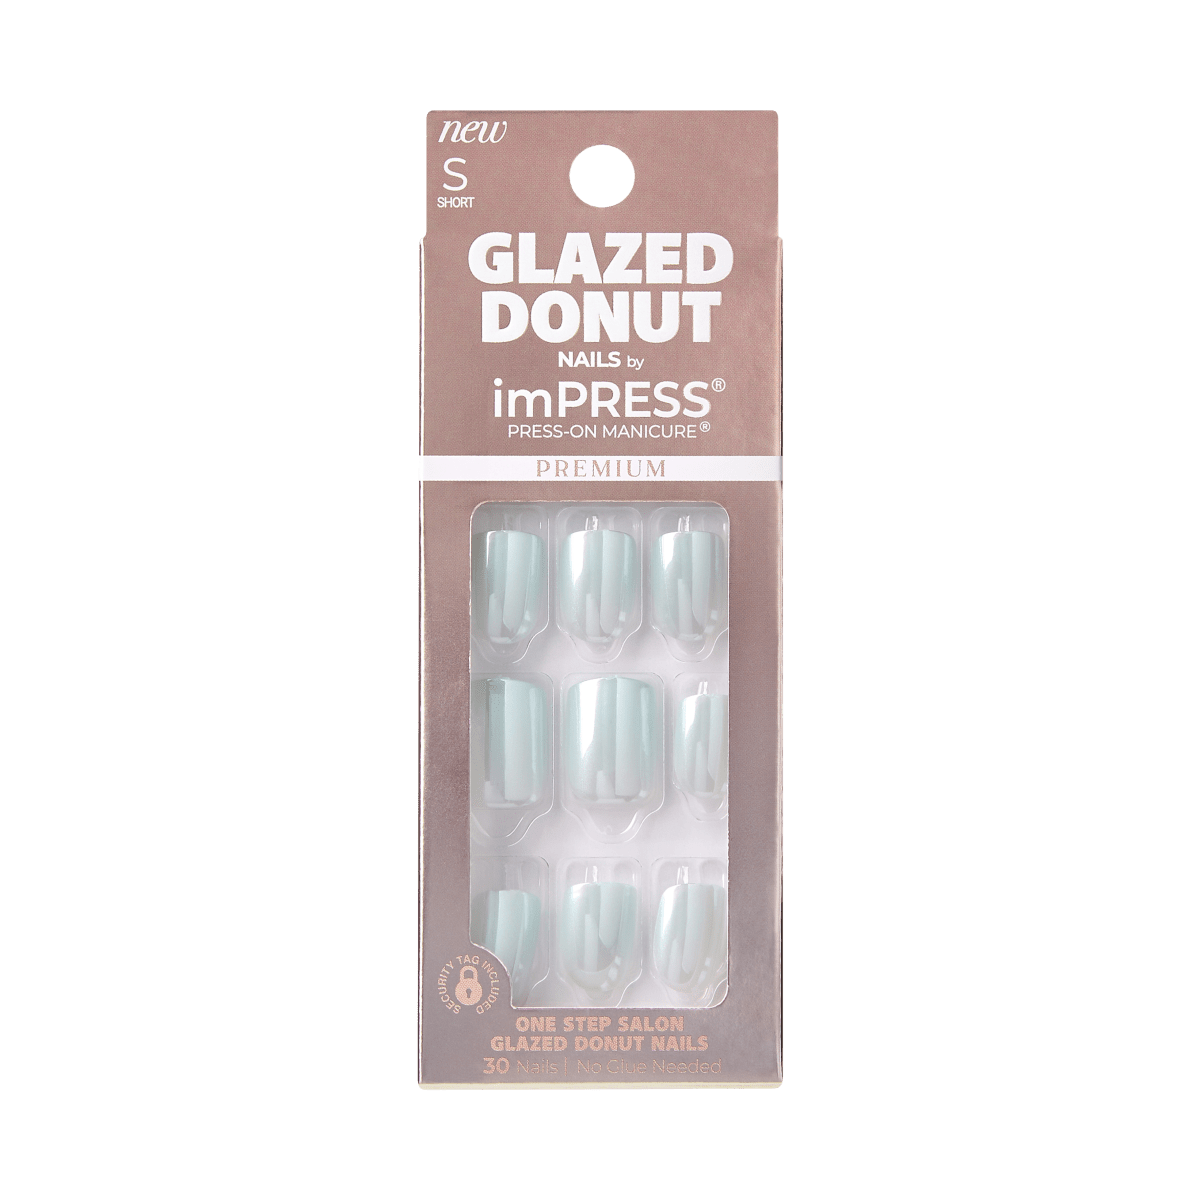 imPRESS Glazed Donut Press-On Manicure - Sky Glazed